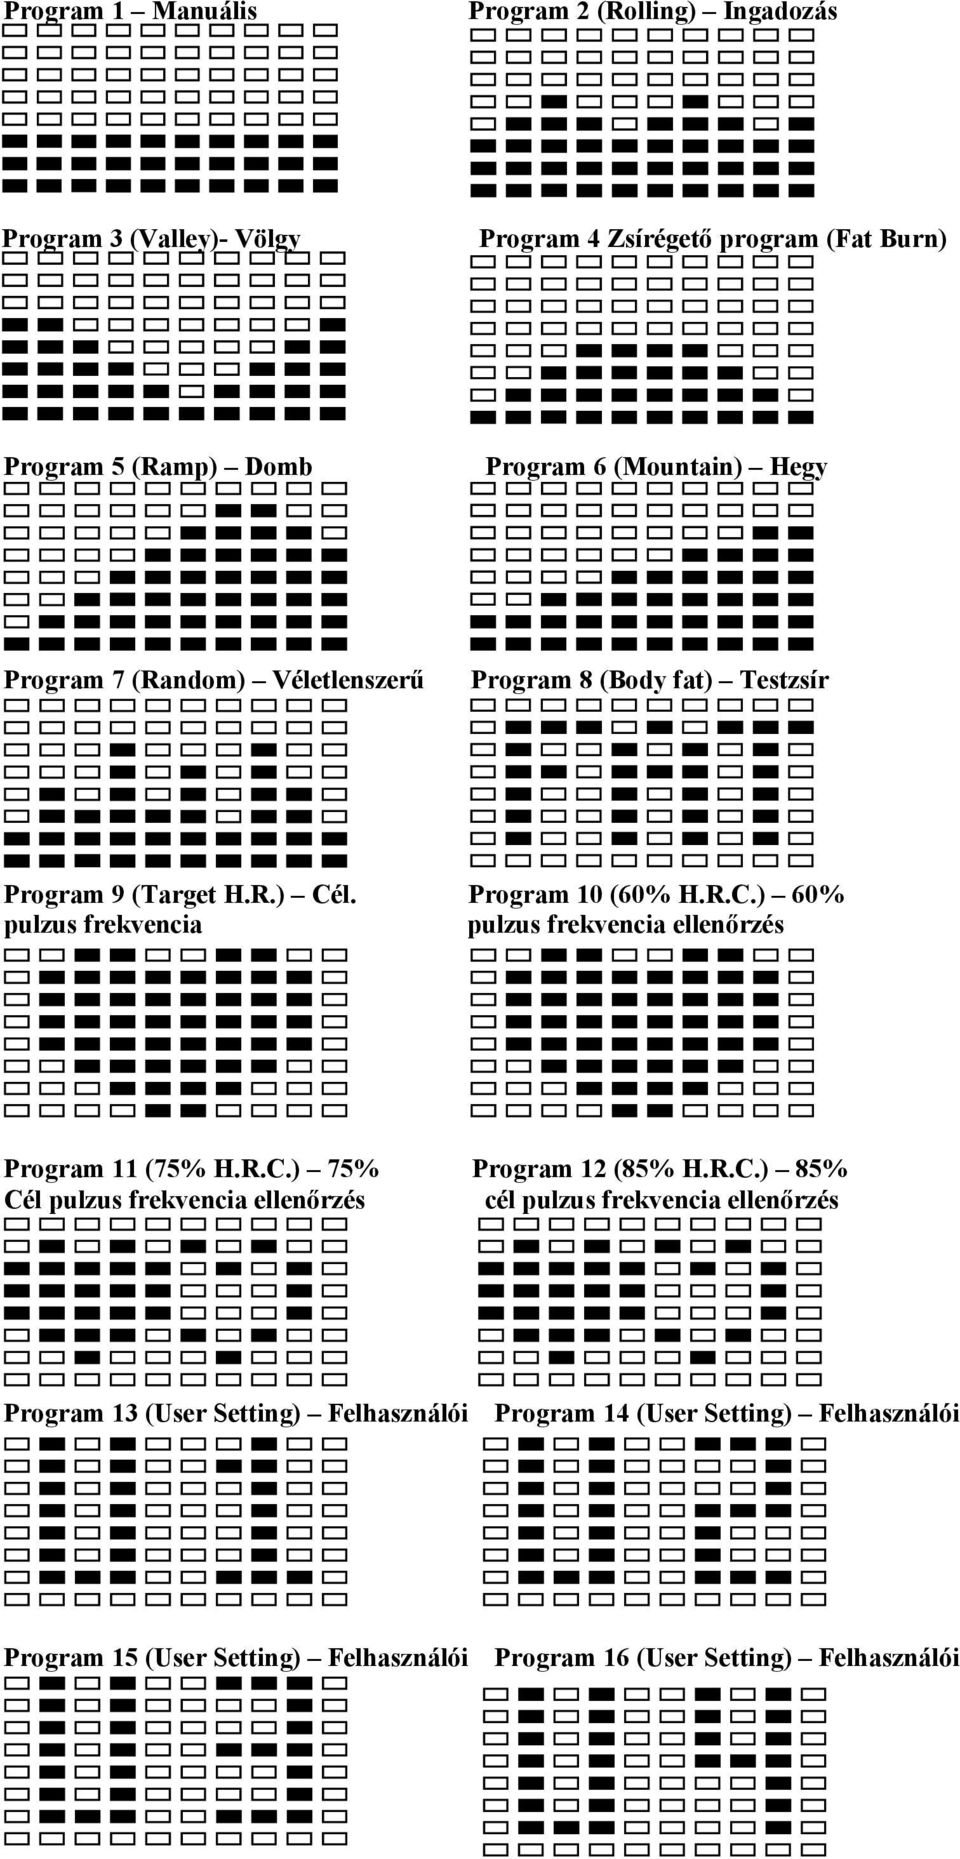 l. pulzus frekvencia Program 0 (60% H.R.C.) 60% pulzus frekvencia ellenőrzés Program (75% H.R.C.) 75% Cél pulzus frekvencia ellenőrzés Program (85% H.